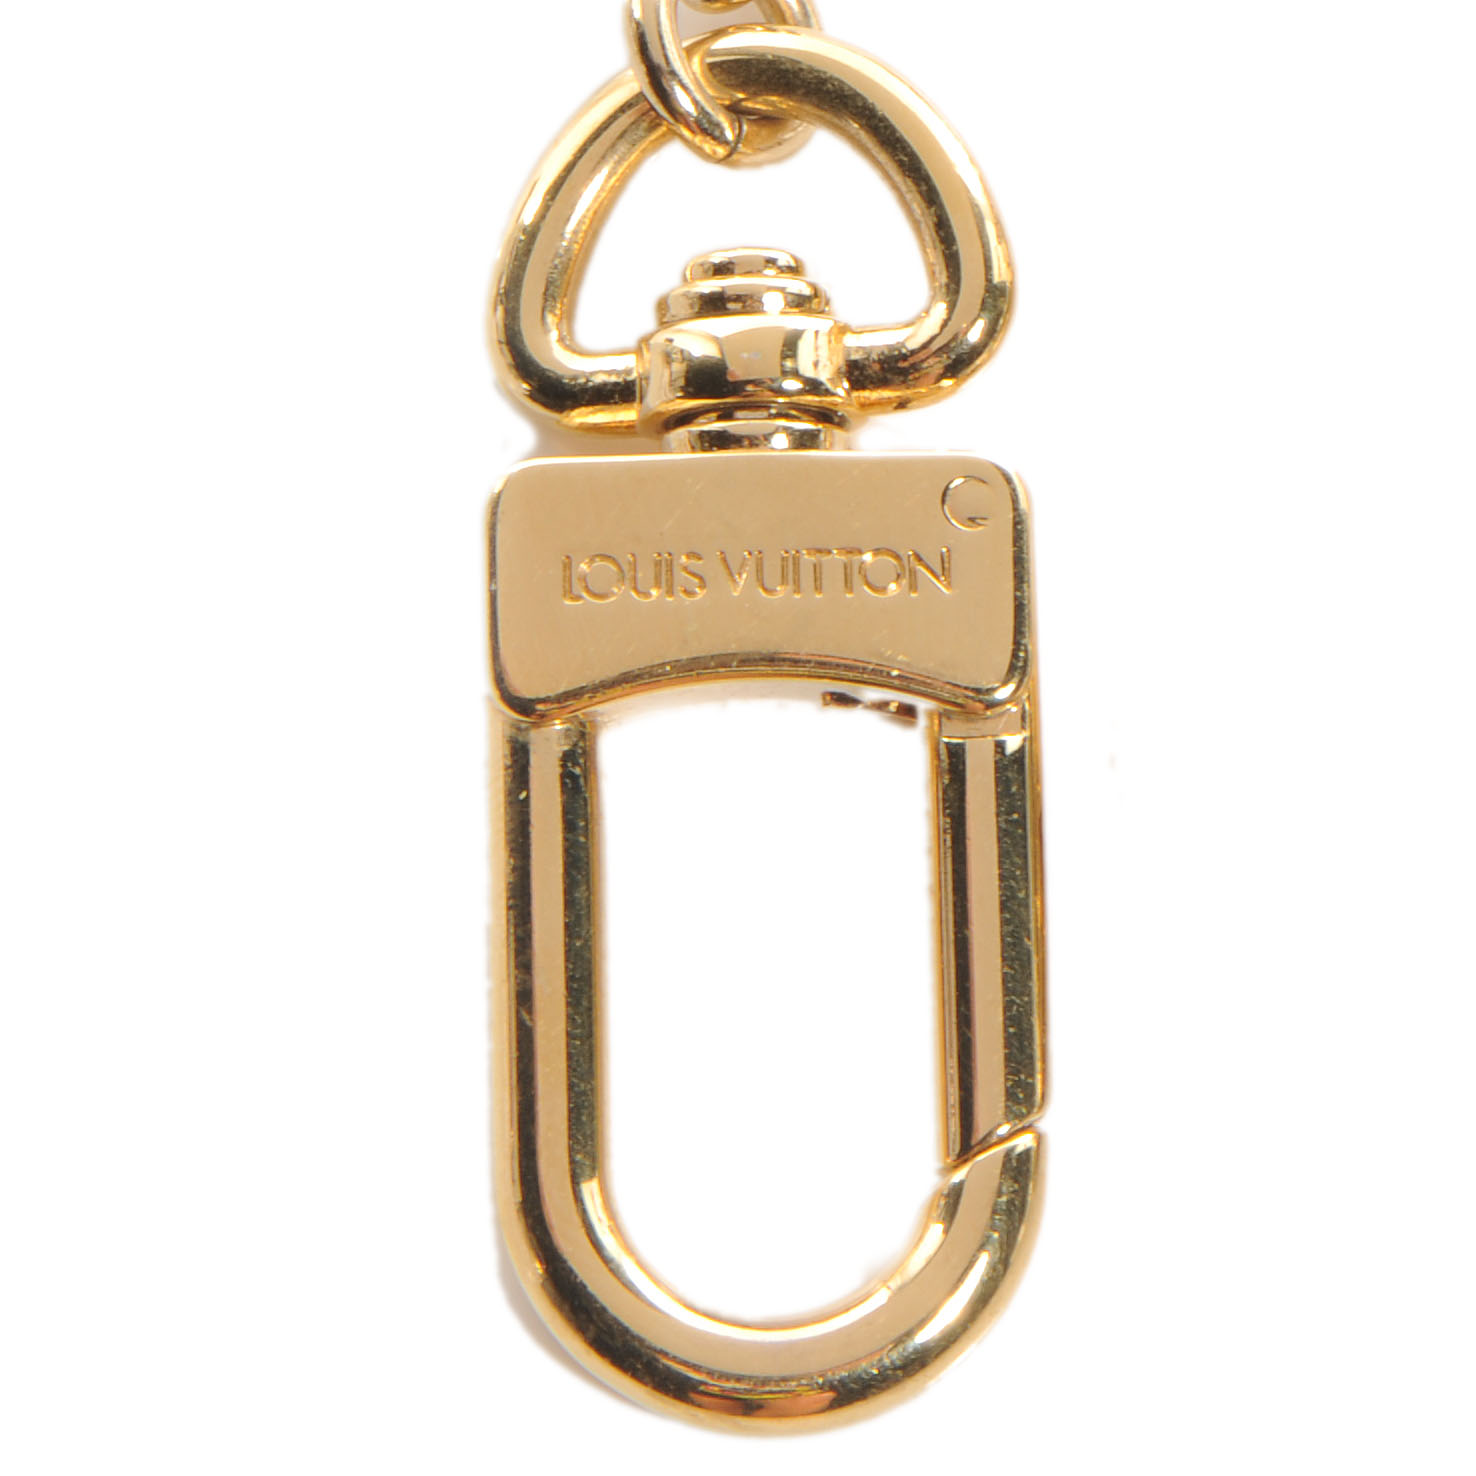 LOUIS VUITTON Pochette Extender Key Ring Chain Gold 65863